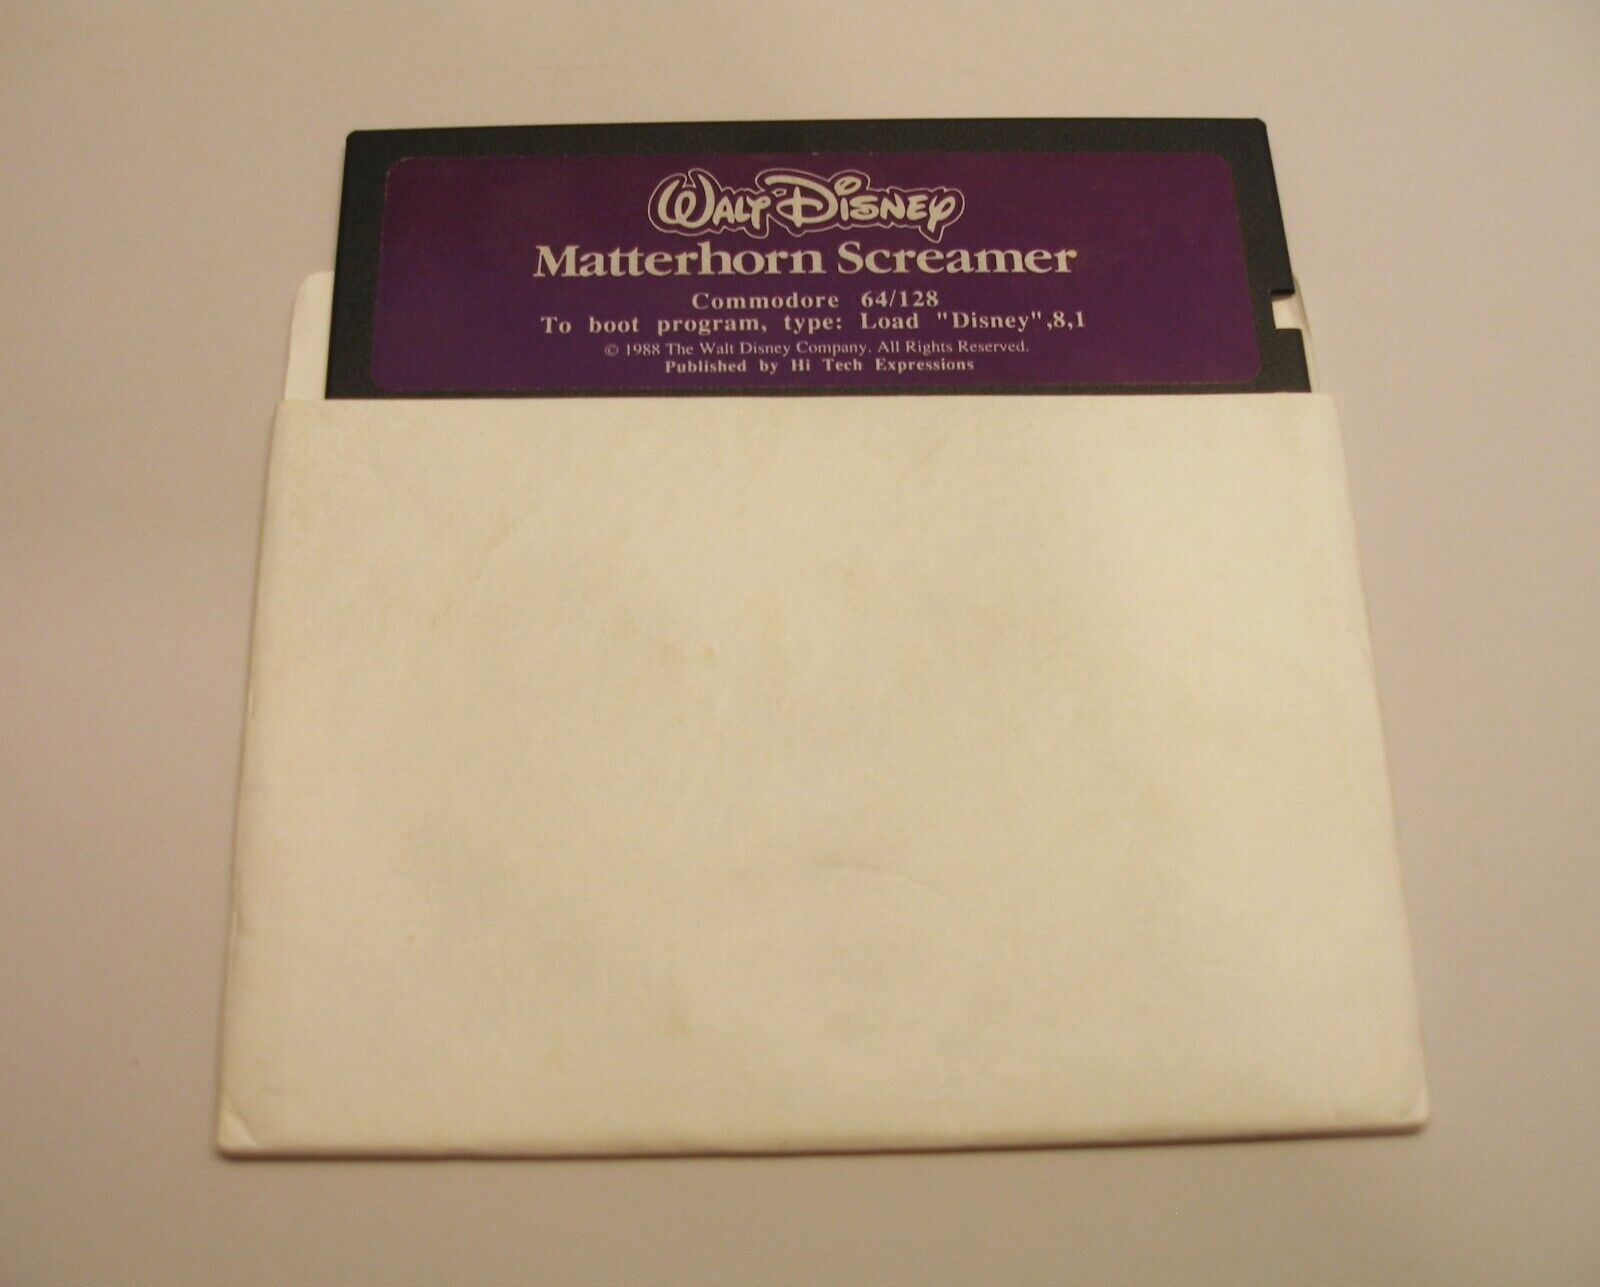 Matterhorn Screamer Disk by Walt Disney for the Commodore 64/128